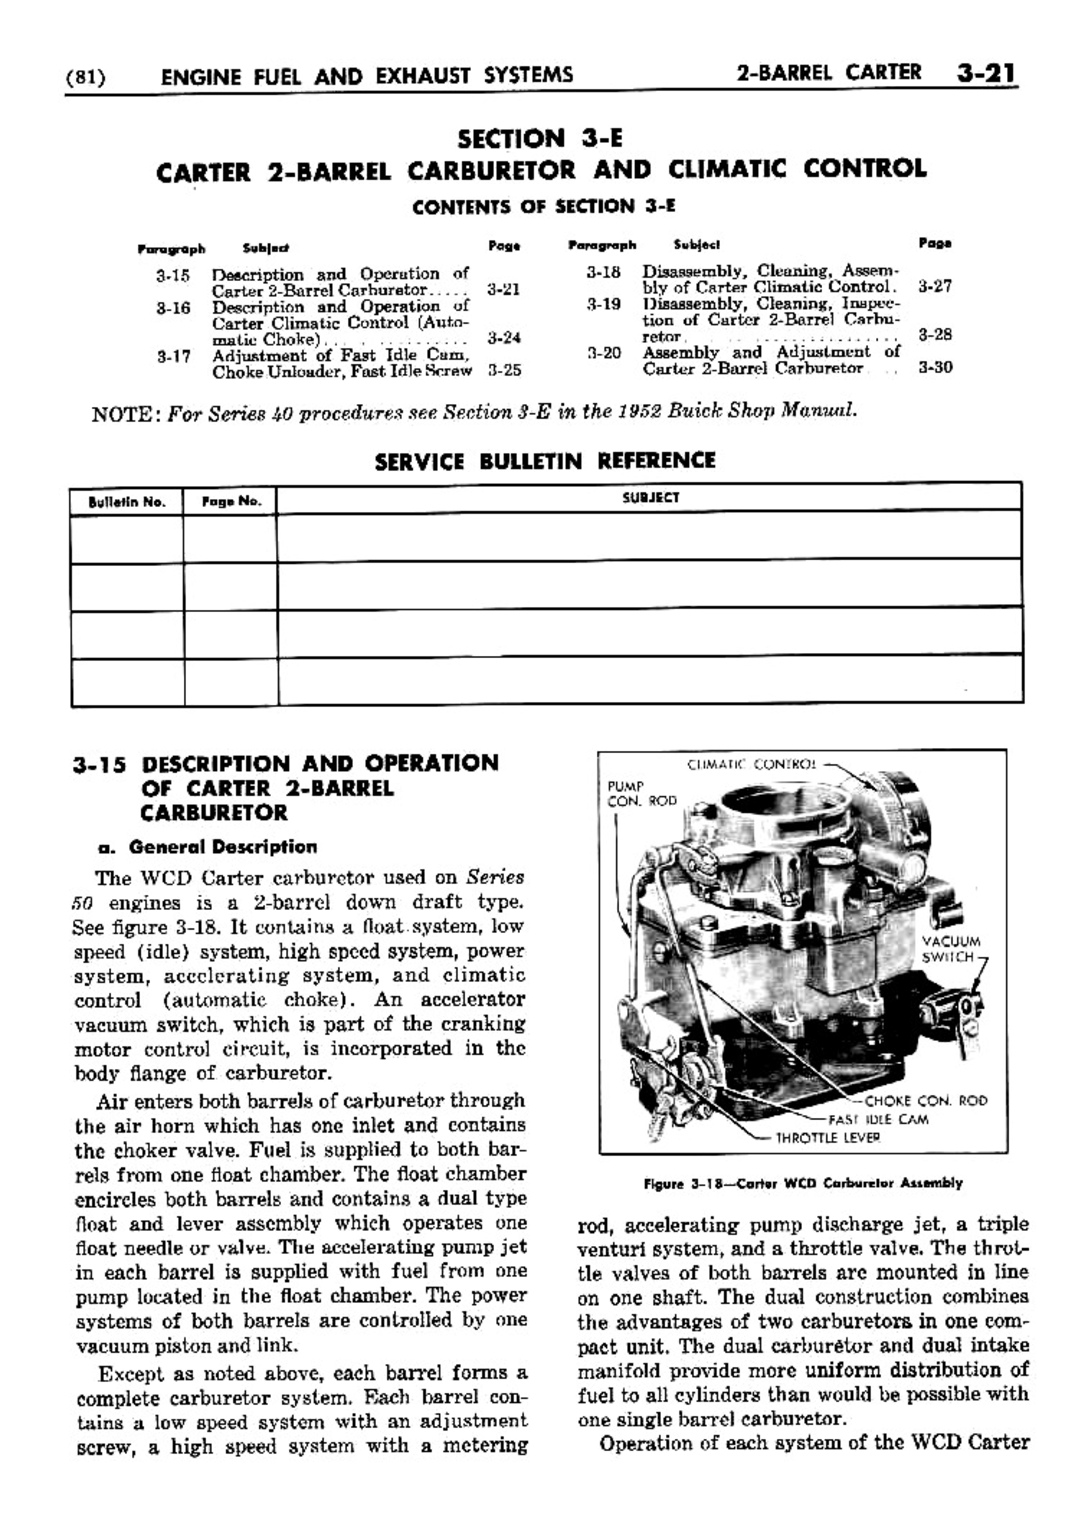 n_04 1953 Buick Shop Manual - Engine Fuel & Exhaust-021-021.jpg